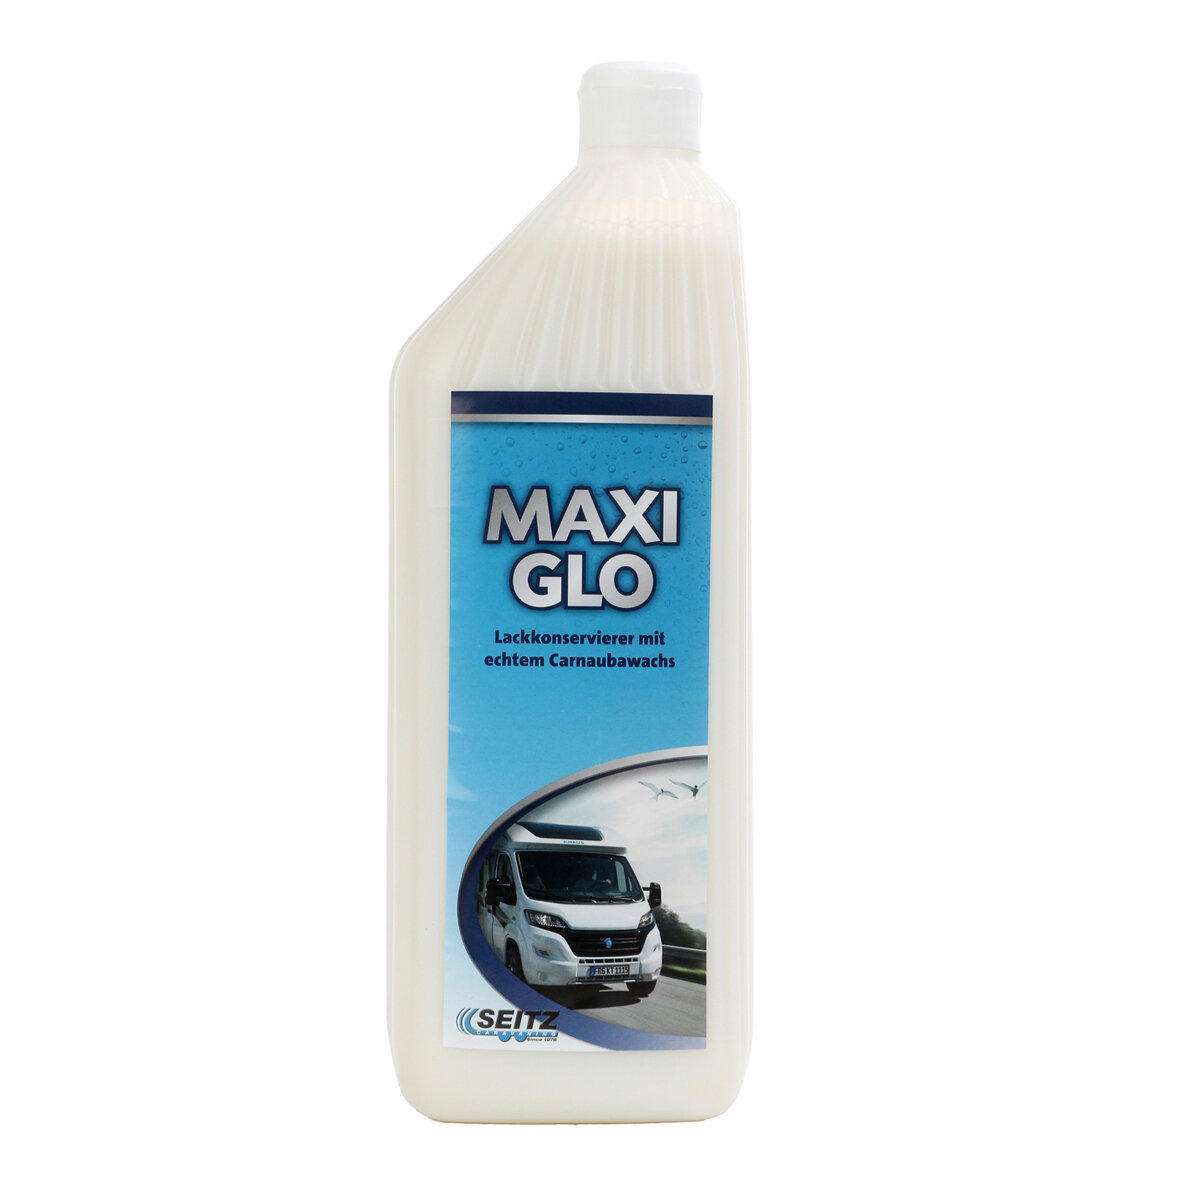 Lackkonservierungsmittel Maxi-Glo